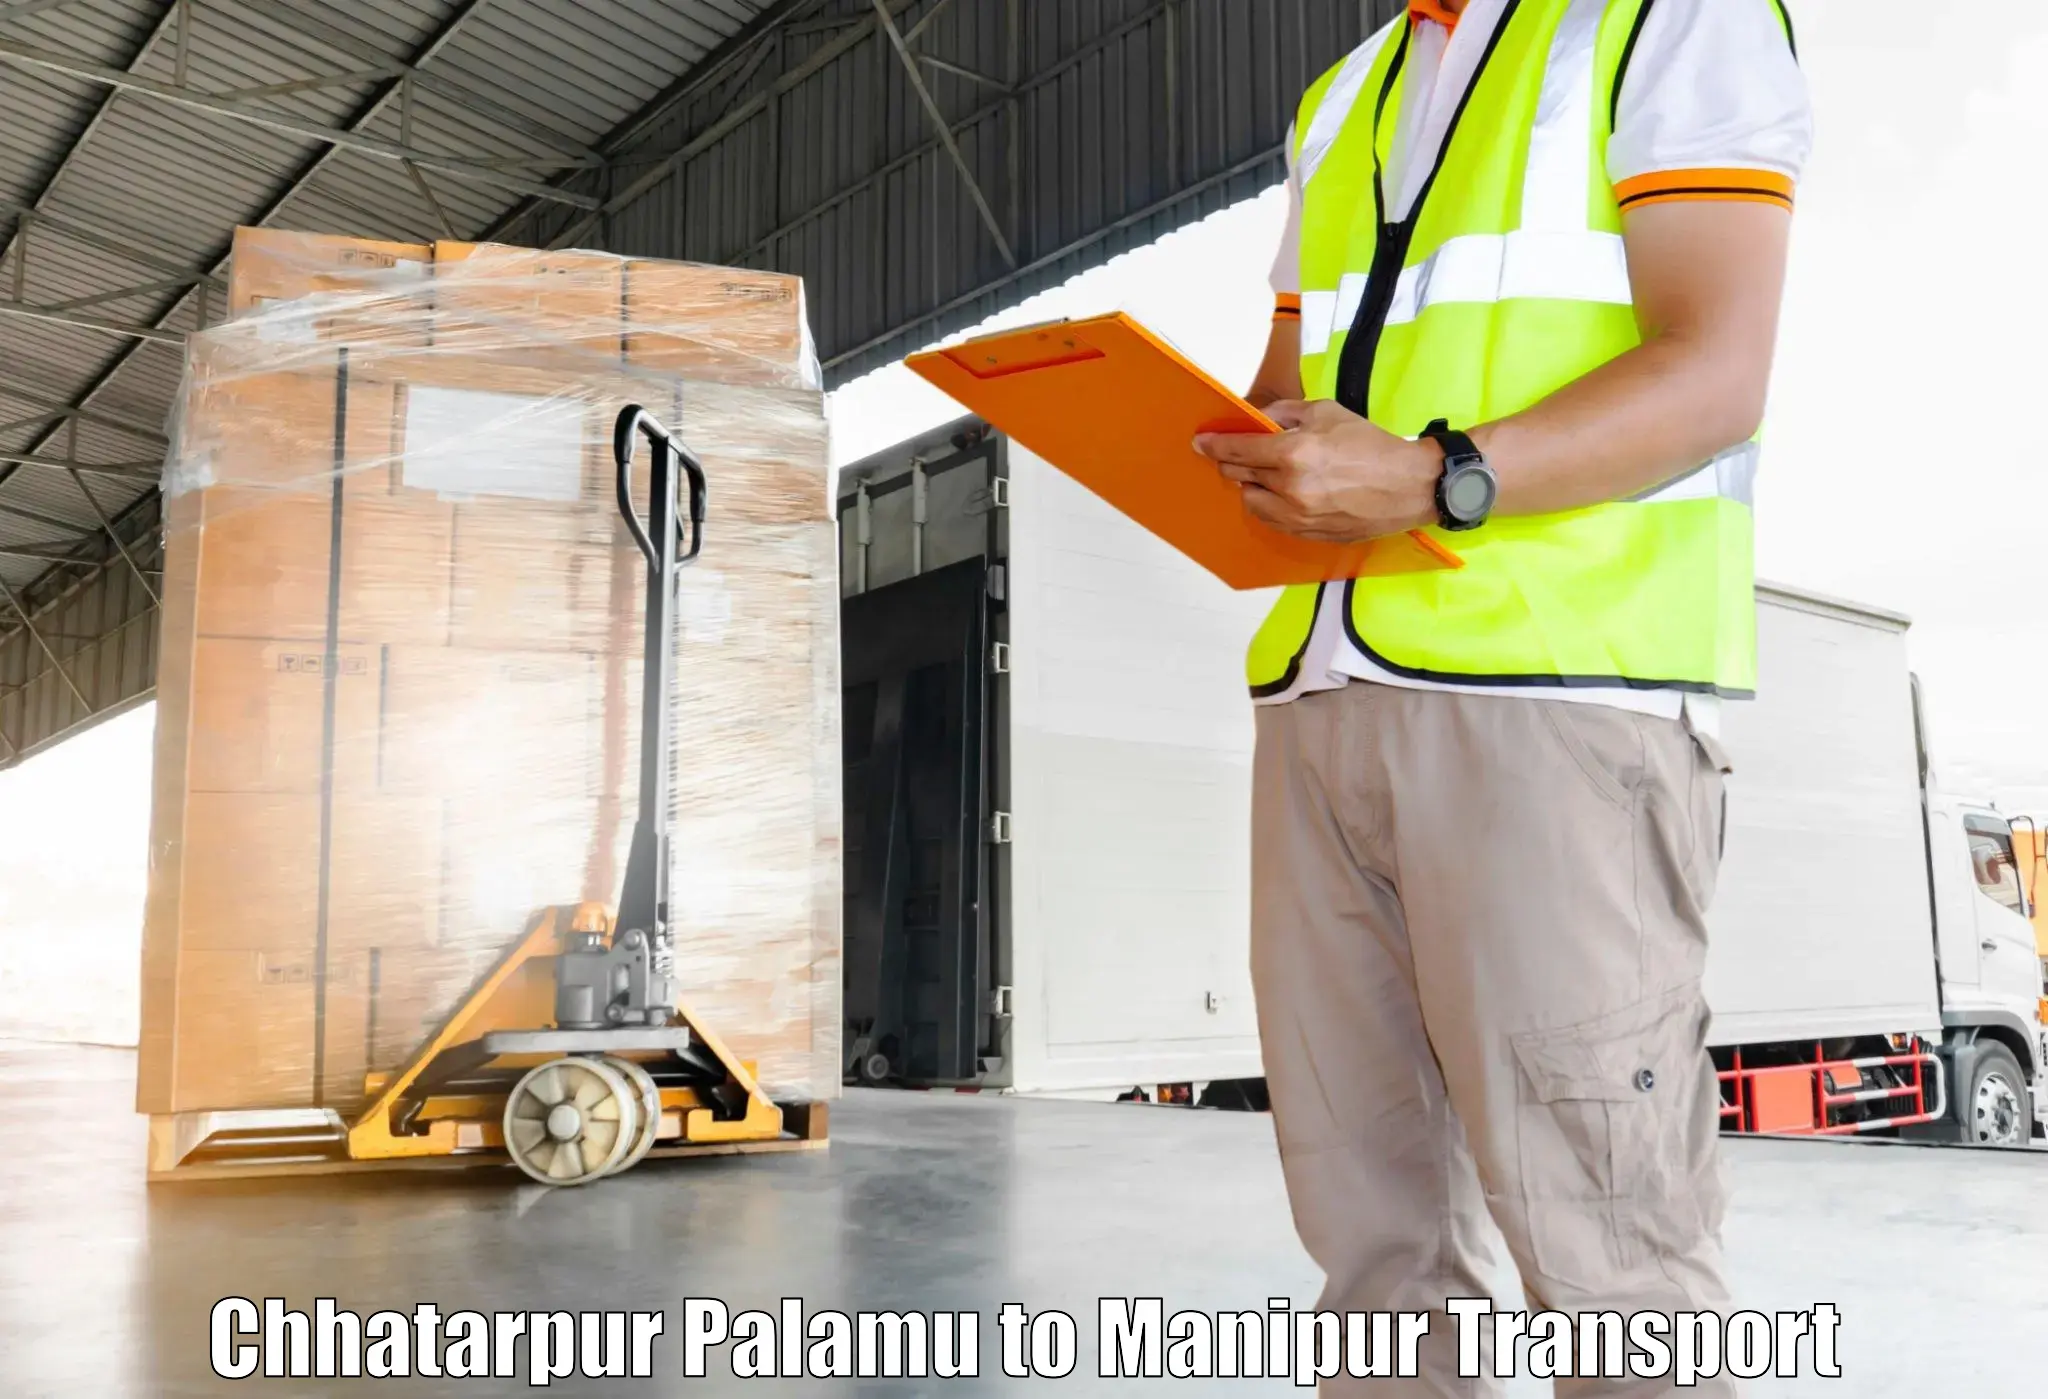 Delivery service Chhatarpur Palamu to Kanti